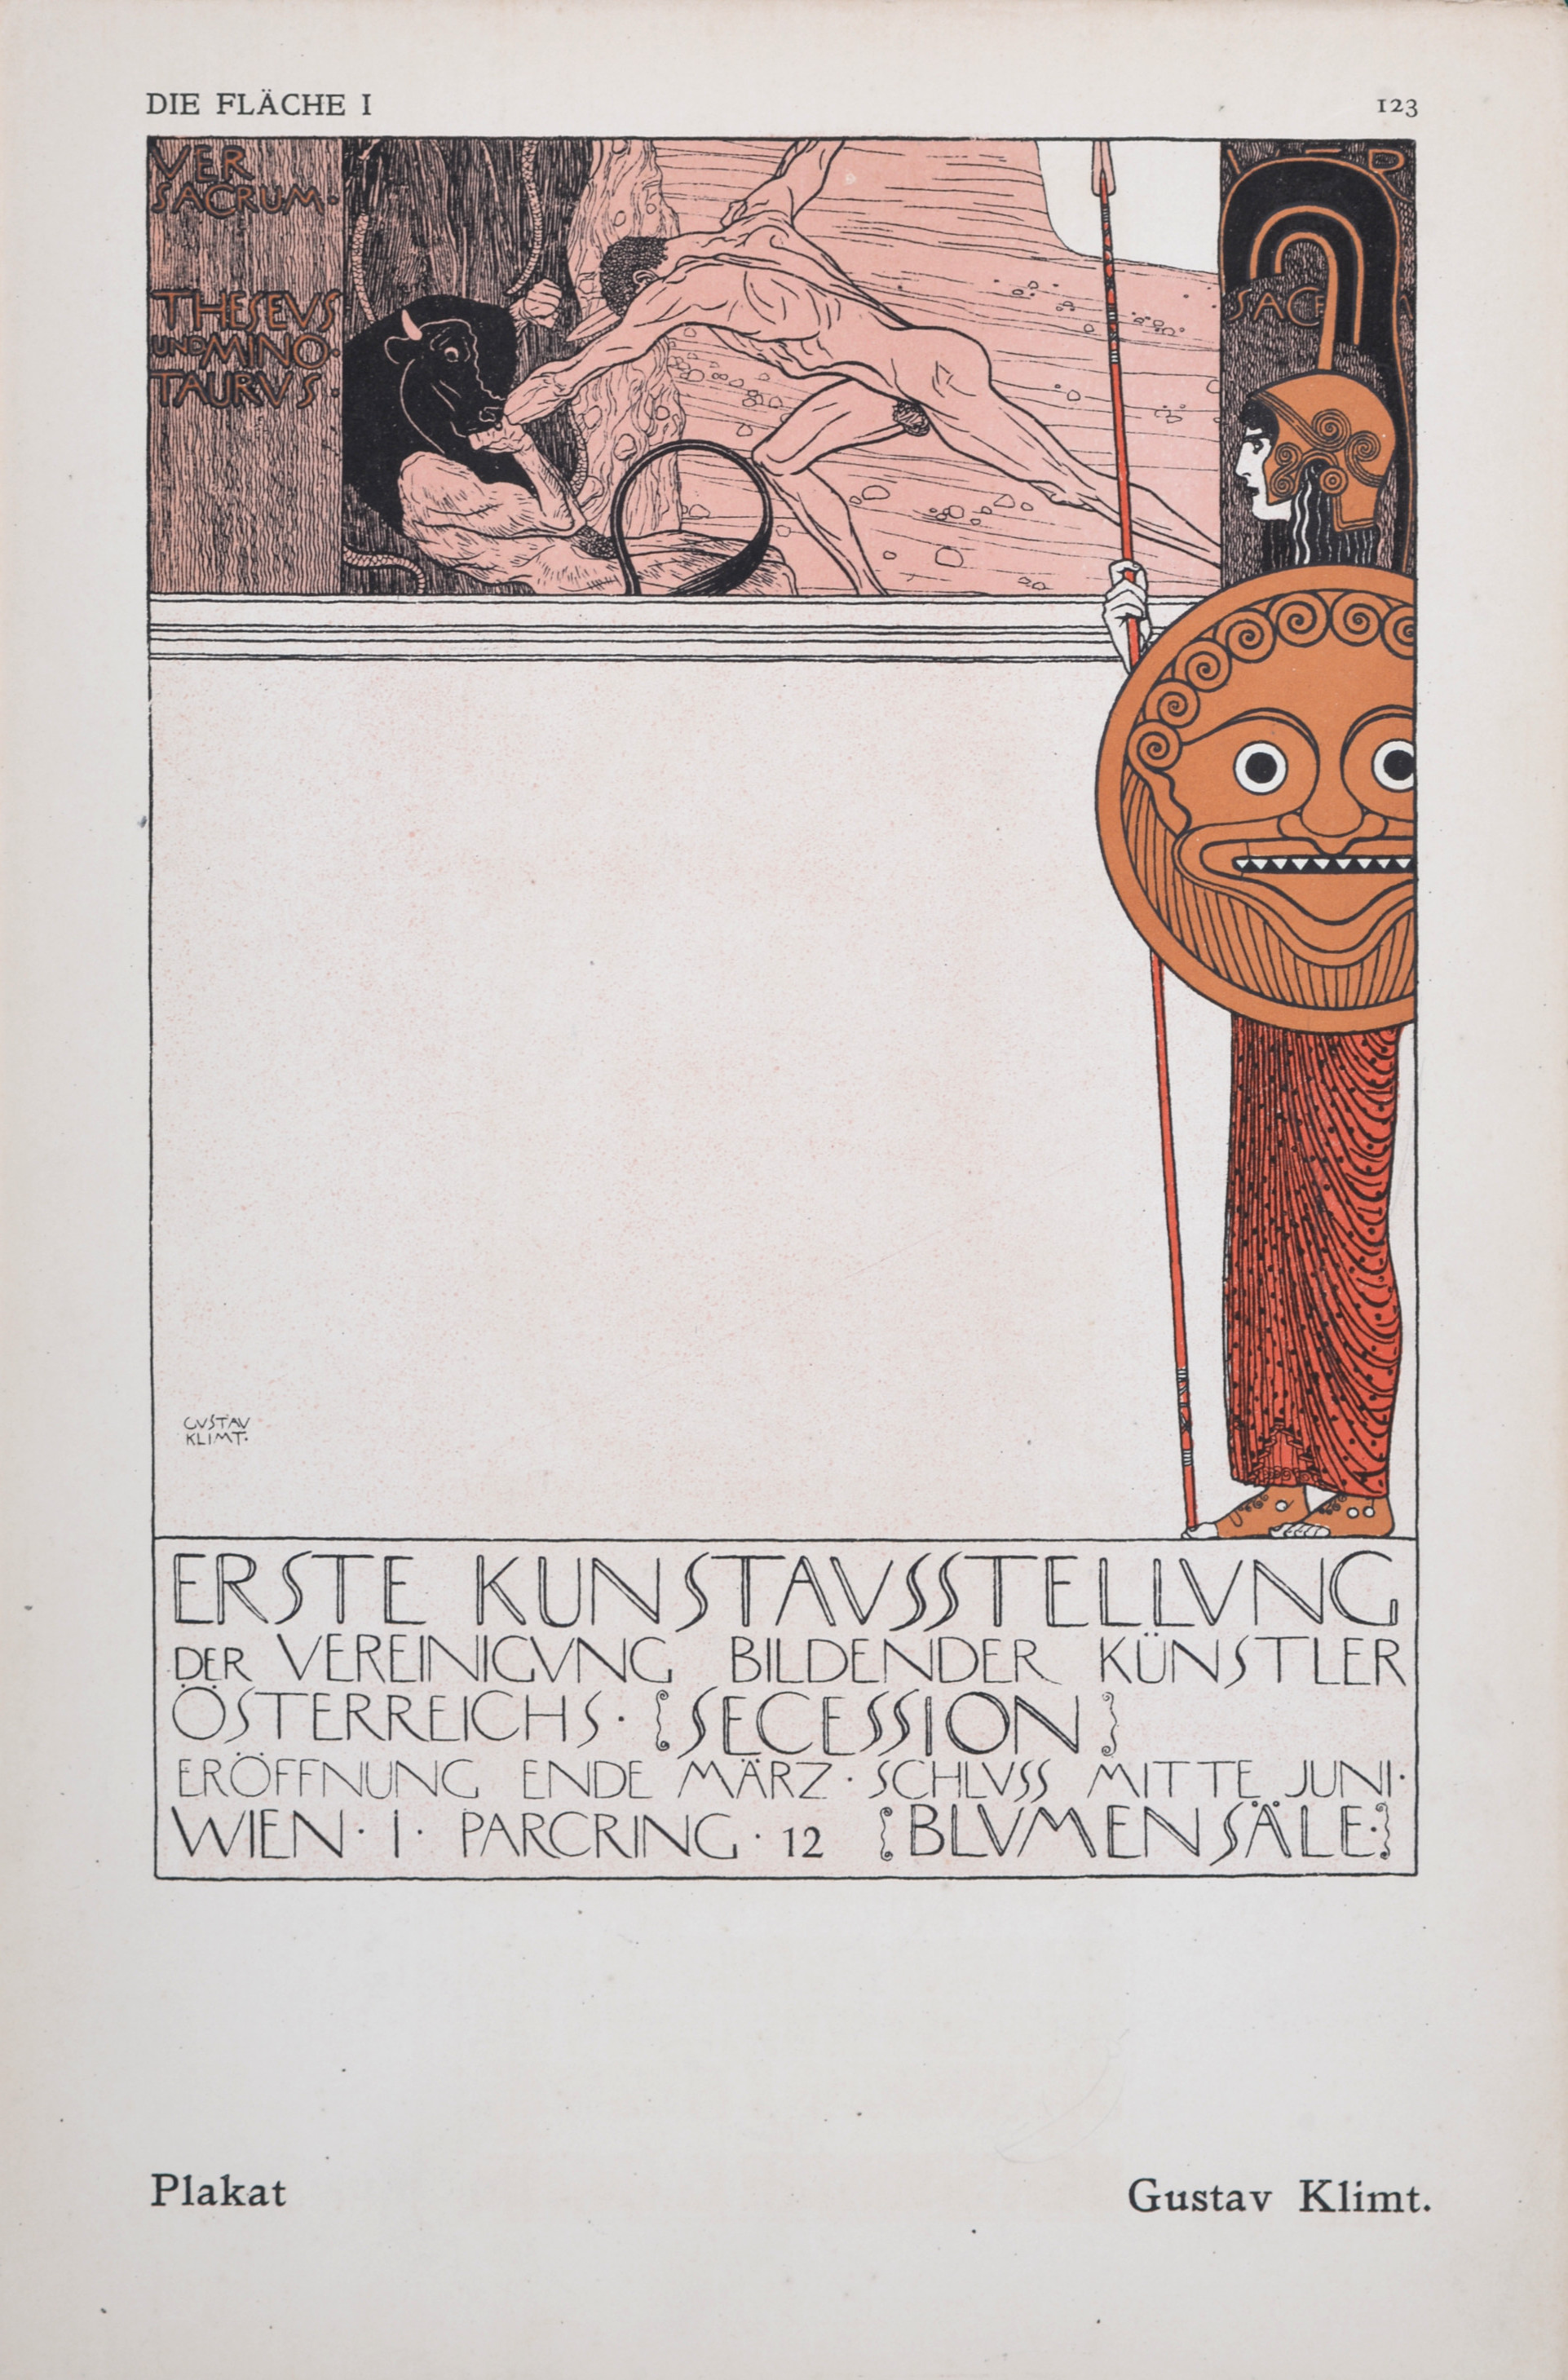 Gustav KLIMT - Erste Kunstausstellung, c. 1902 - Original lithographic poster Post War Modern Art - Plazzart